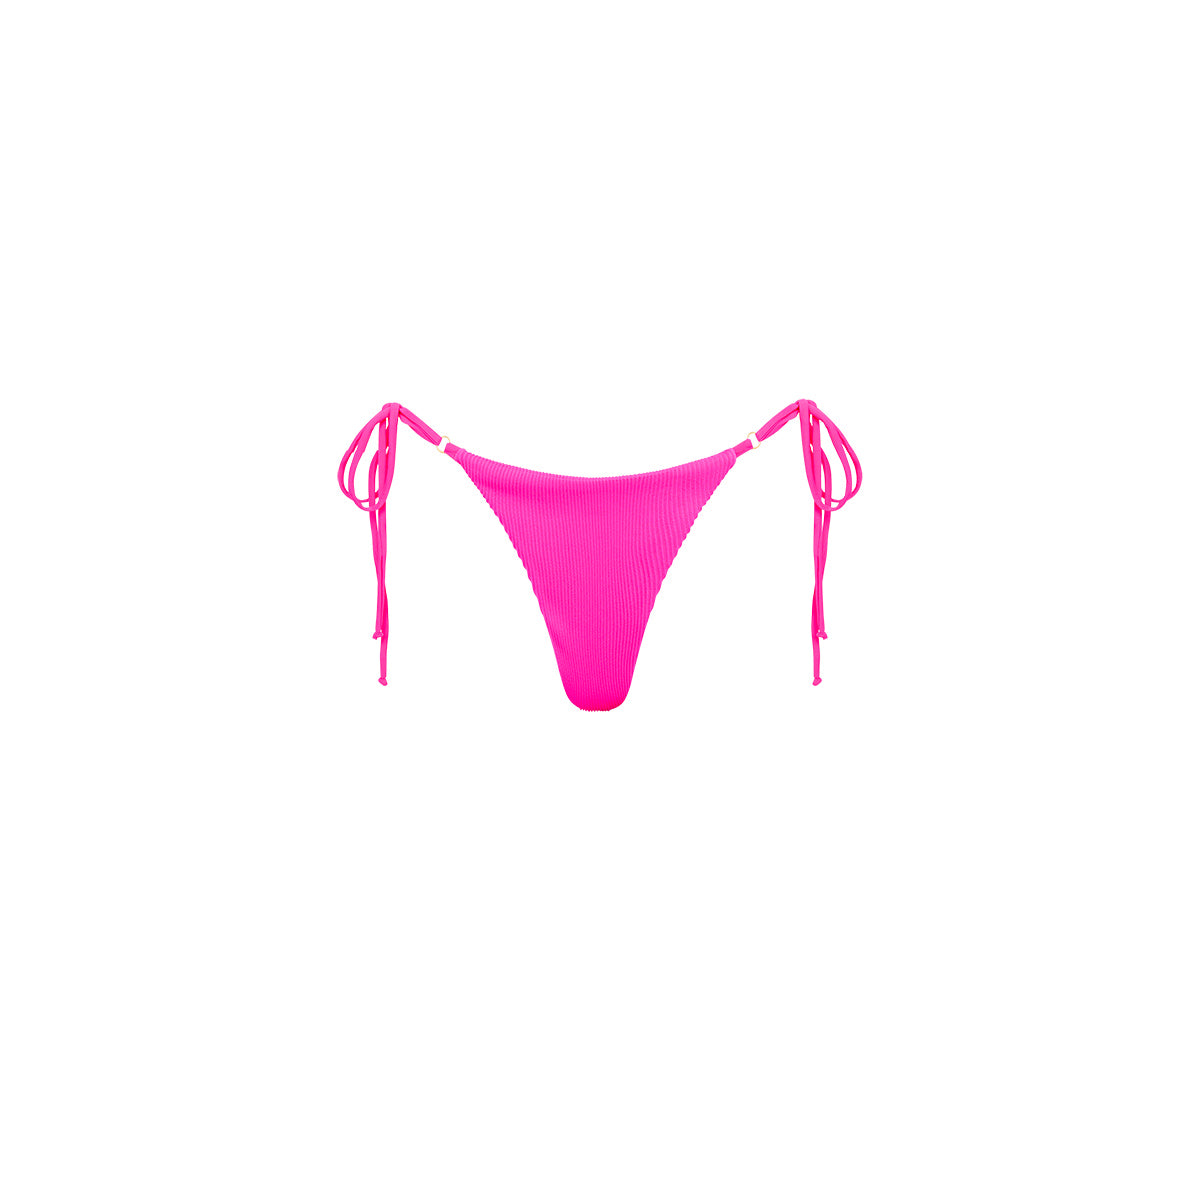 Kulani Kinis Thong Tie Side Bikini Bottom - Flamingo Pink Ribbed (Atomic Daisy Collection)